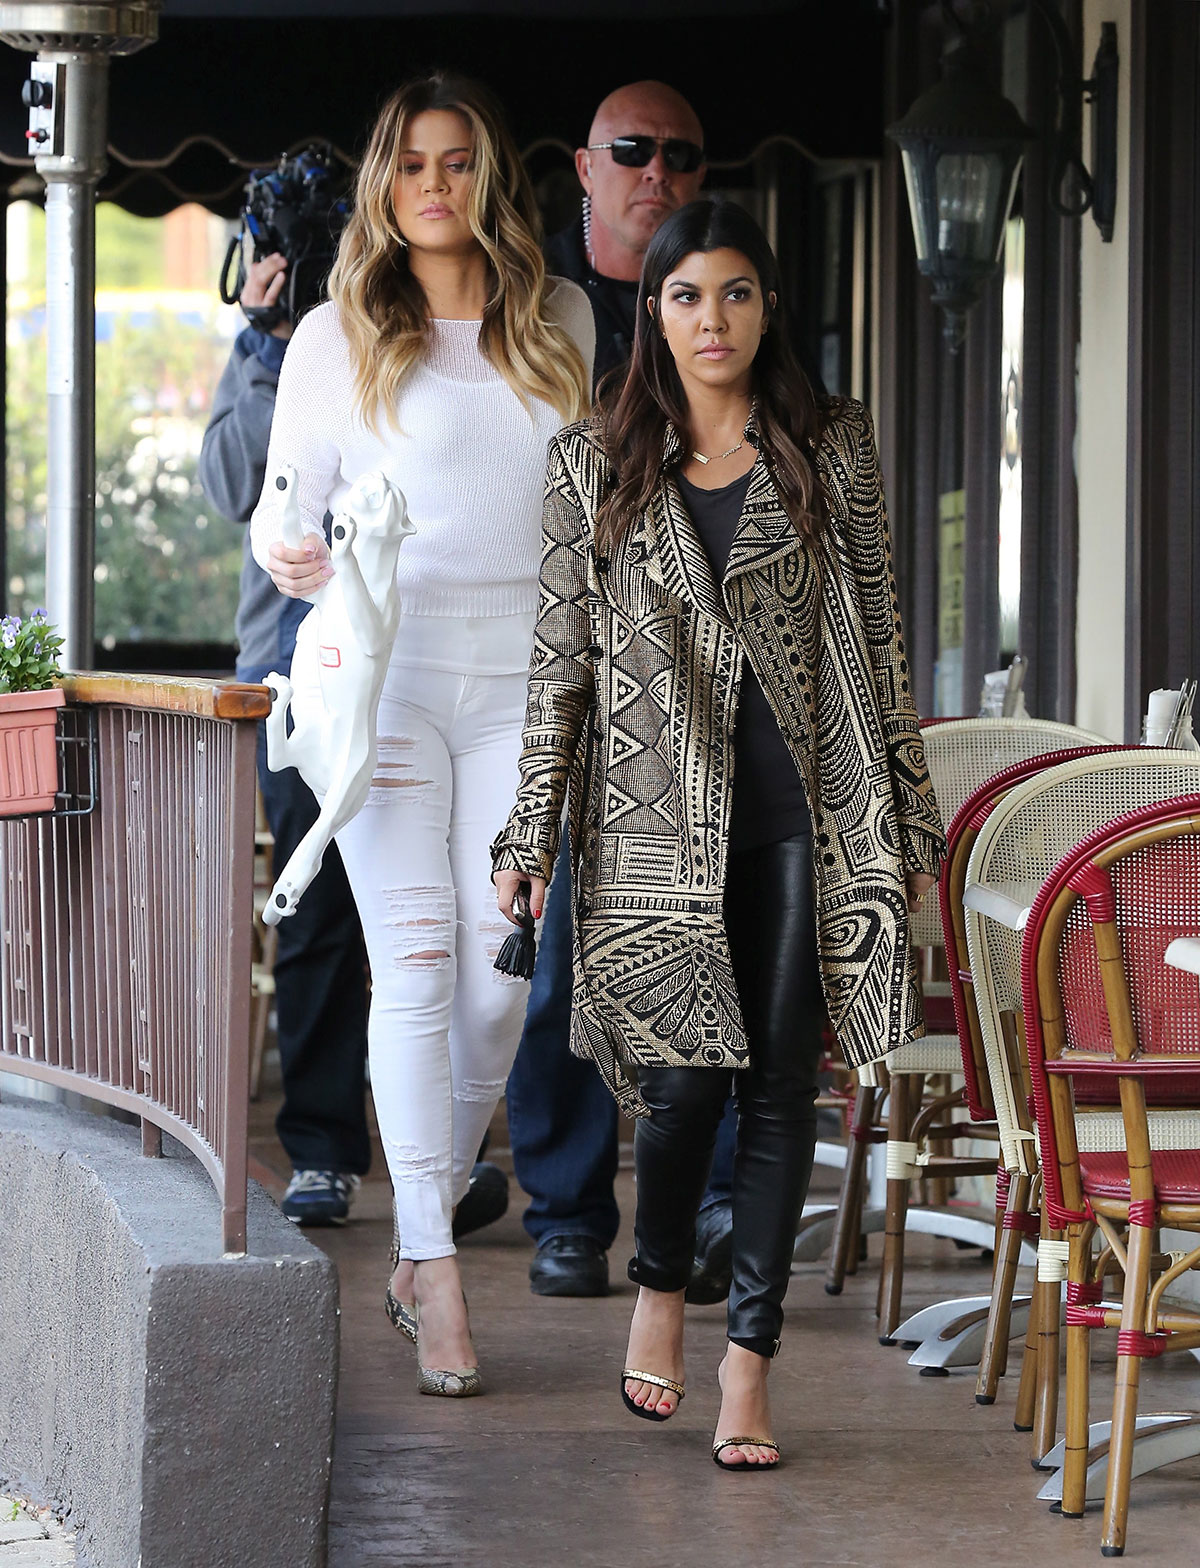 Khloe and Kourtney Kardashian filming KUWtK